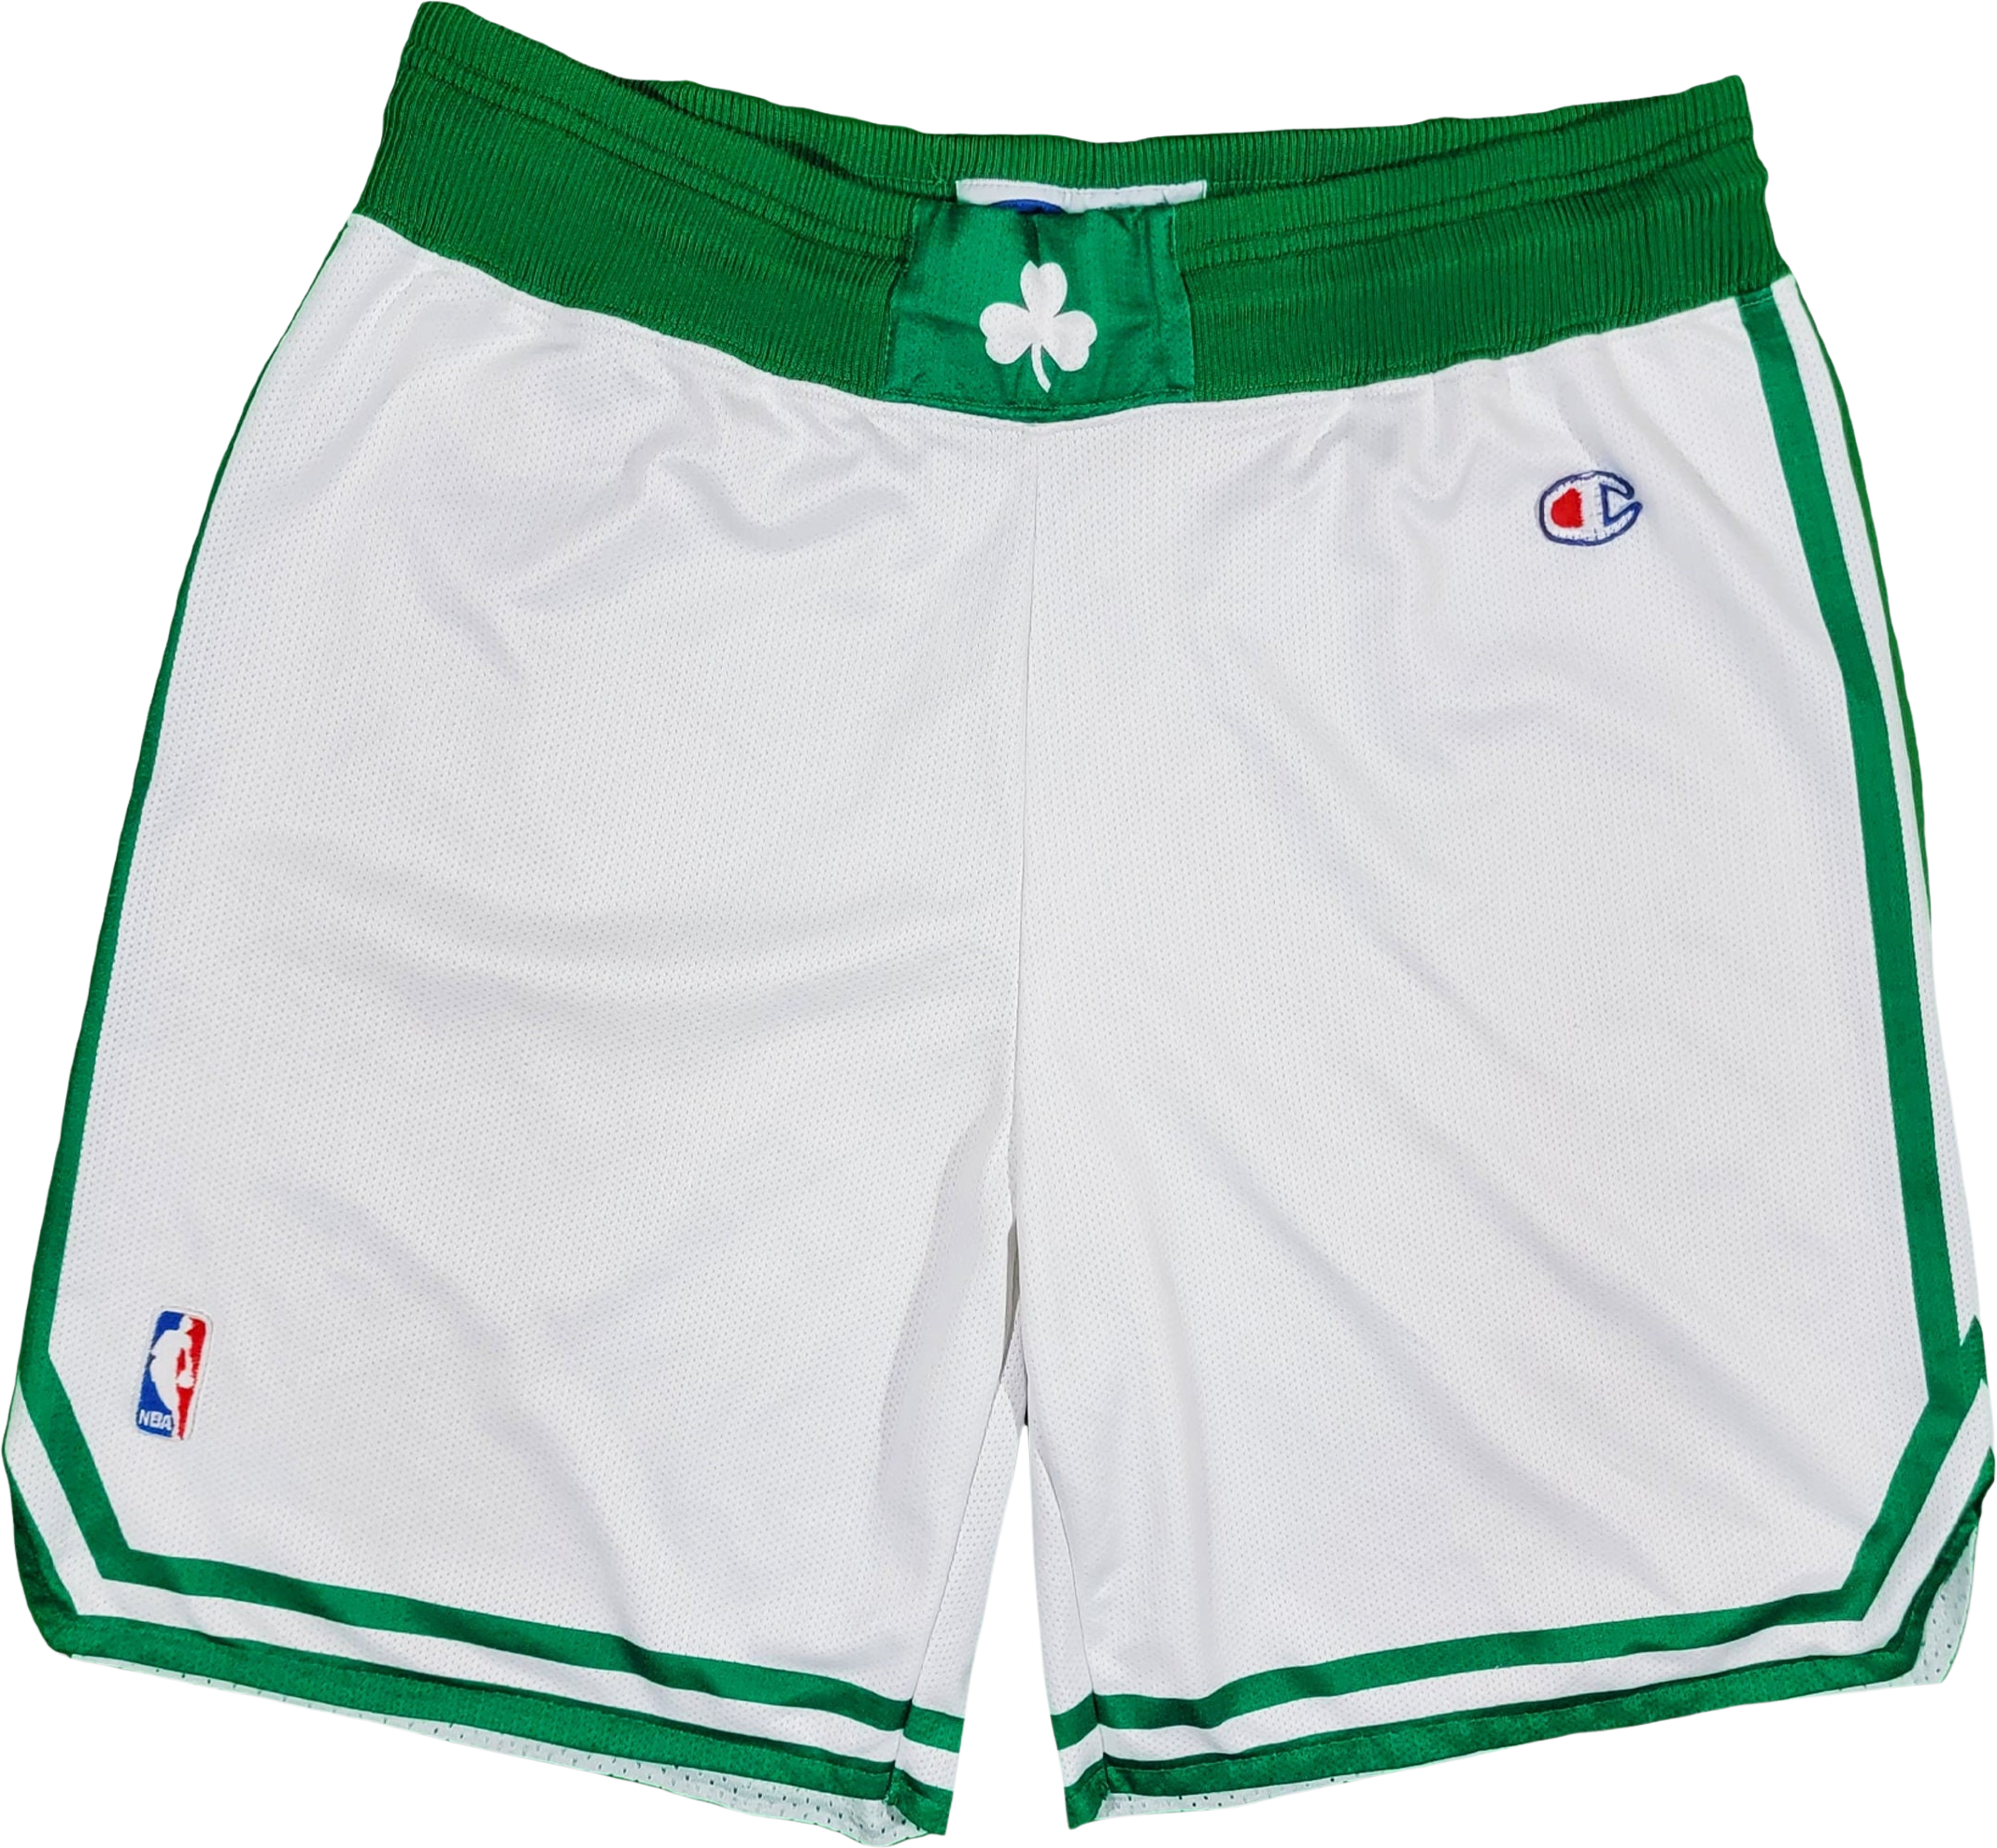 Official Boston Celtics Shorts, Basketball Shorts, Gym Shorts, Compression  Shorts